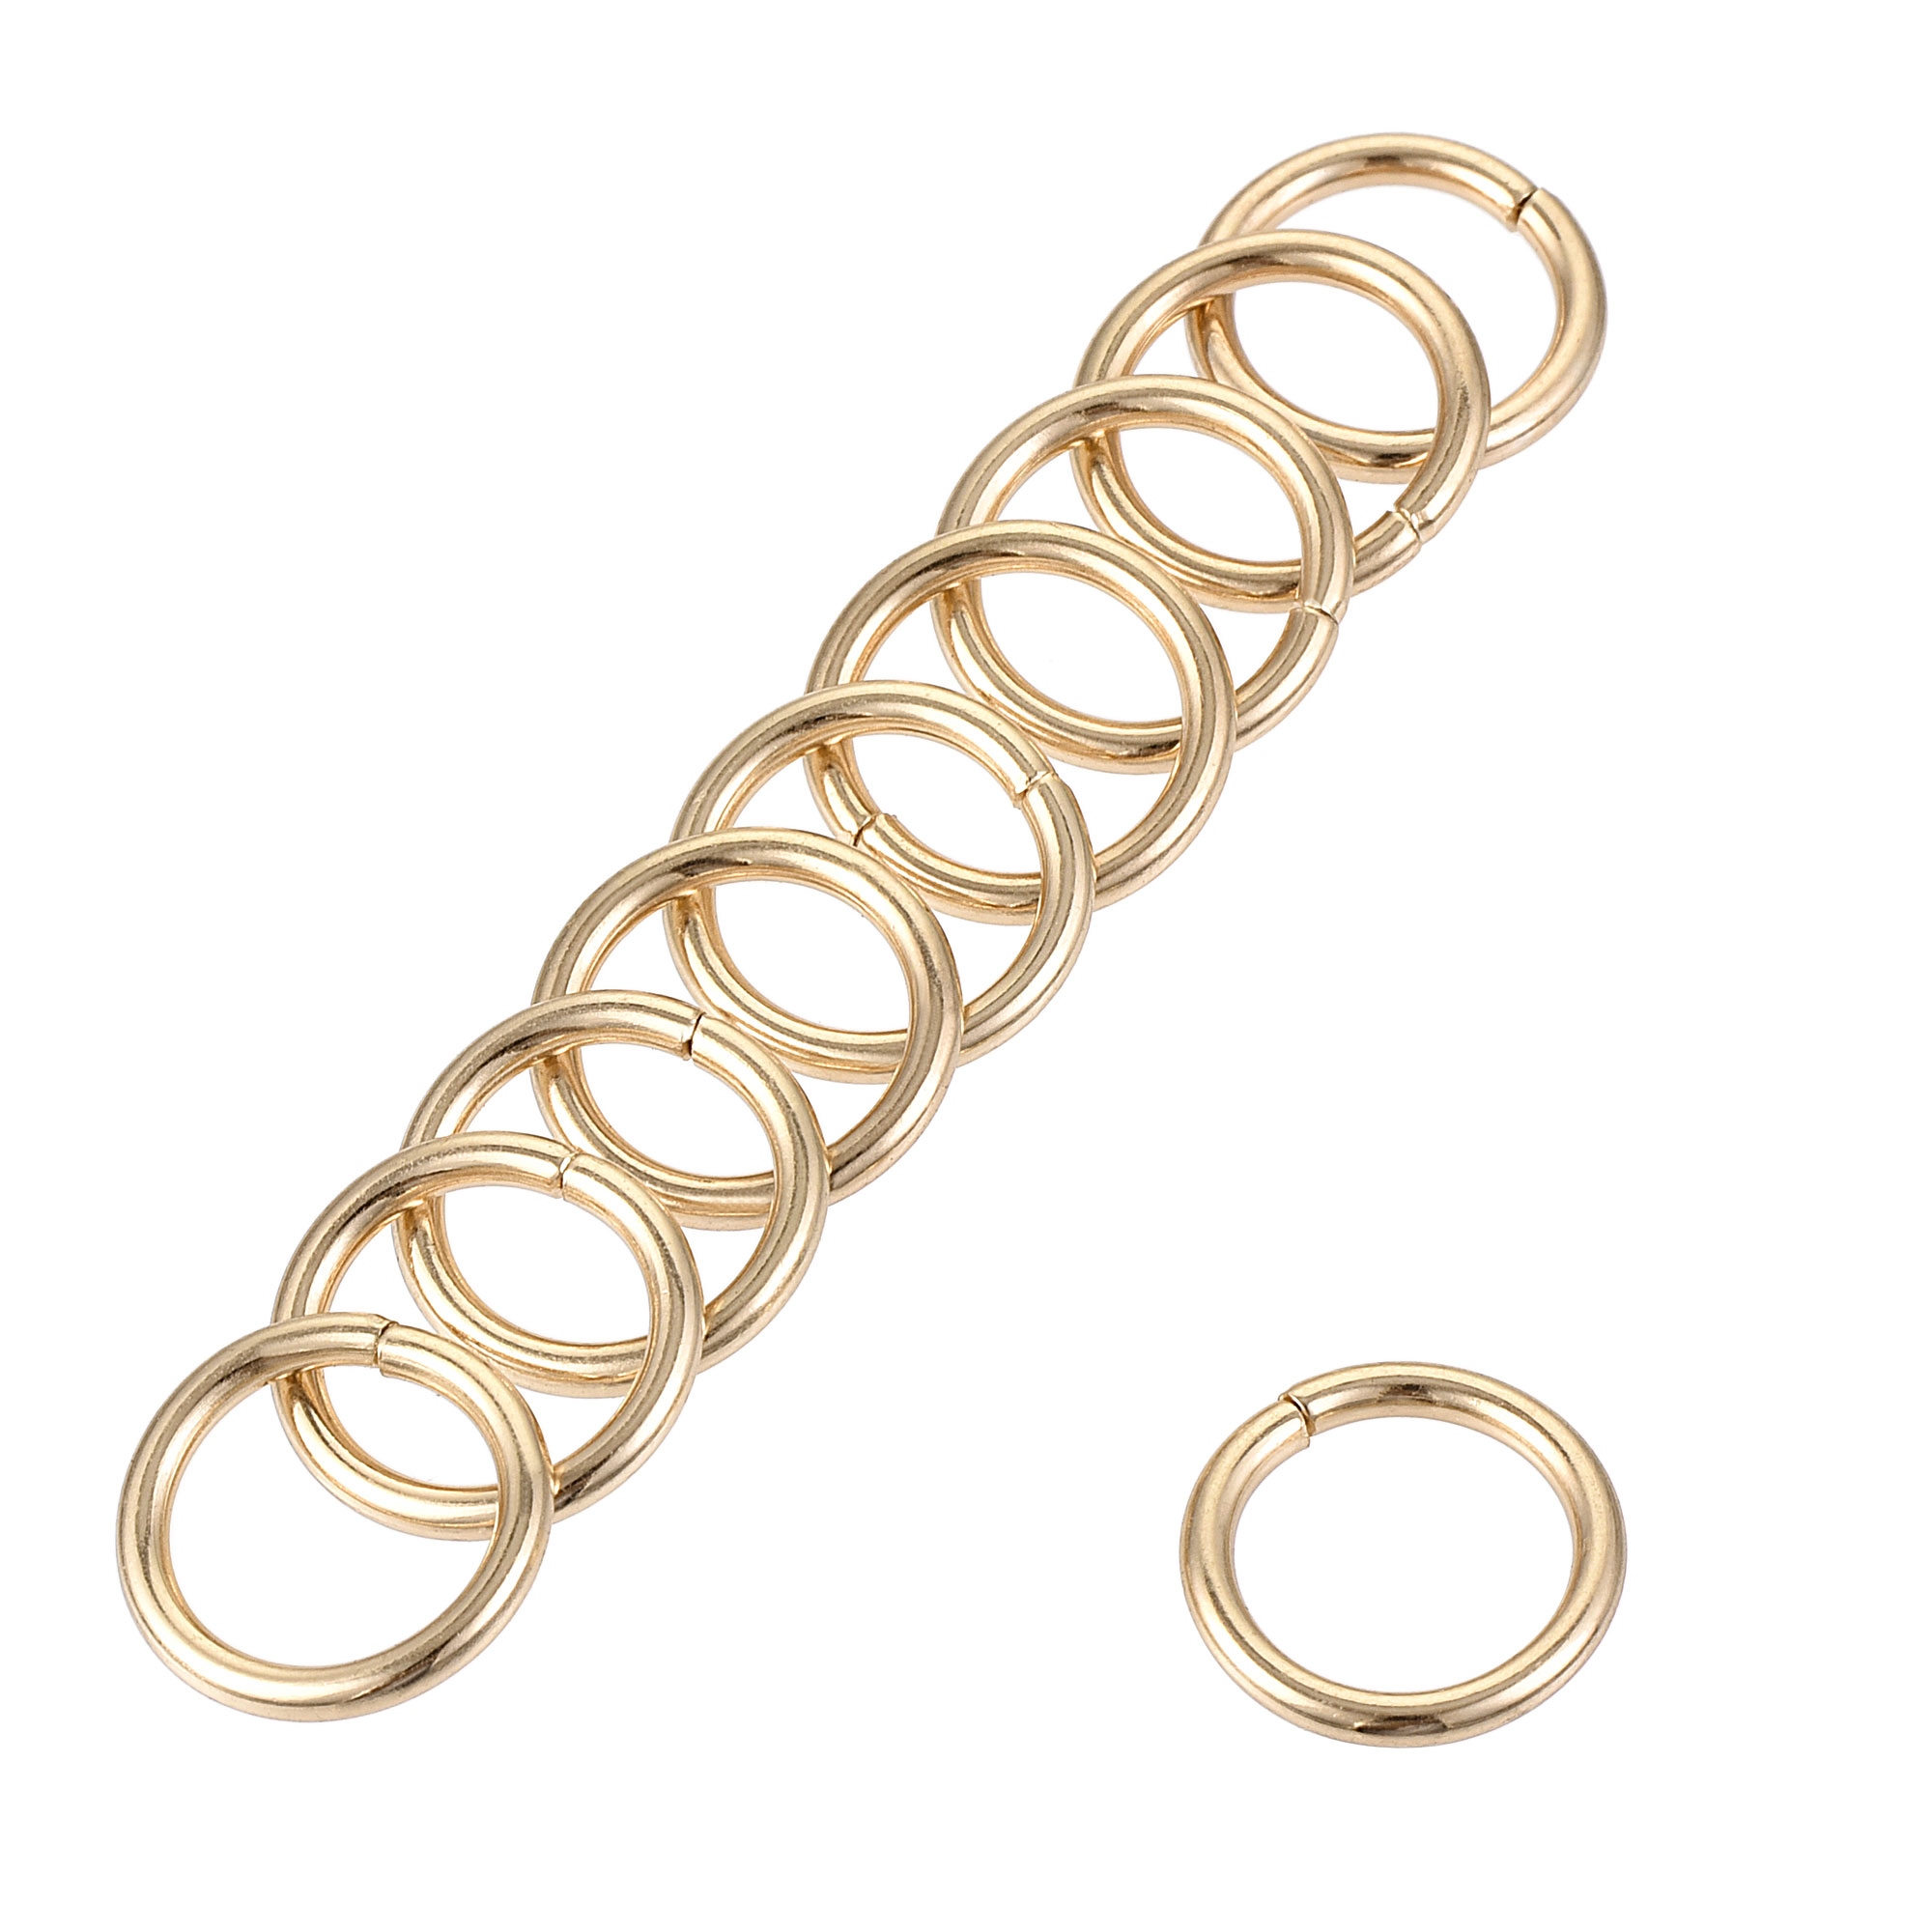 Unique Bargains 10mm Metal O Rings Non-Welded for Straps Bags Belt DIY Gold Tone 30pcs - Gold Tone